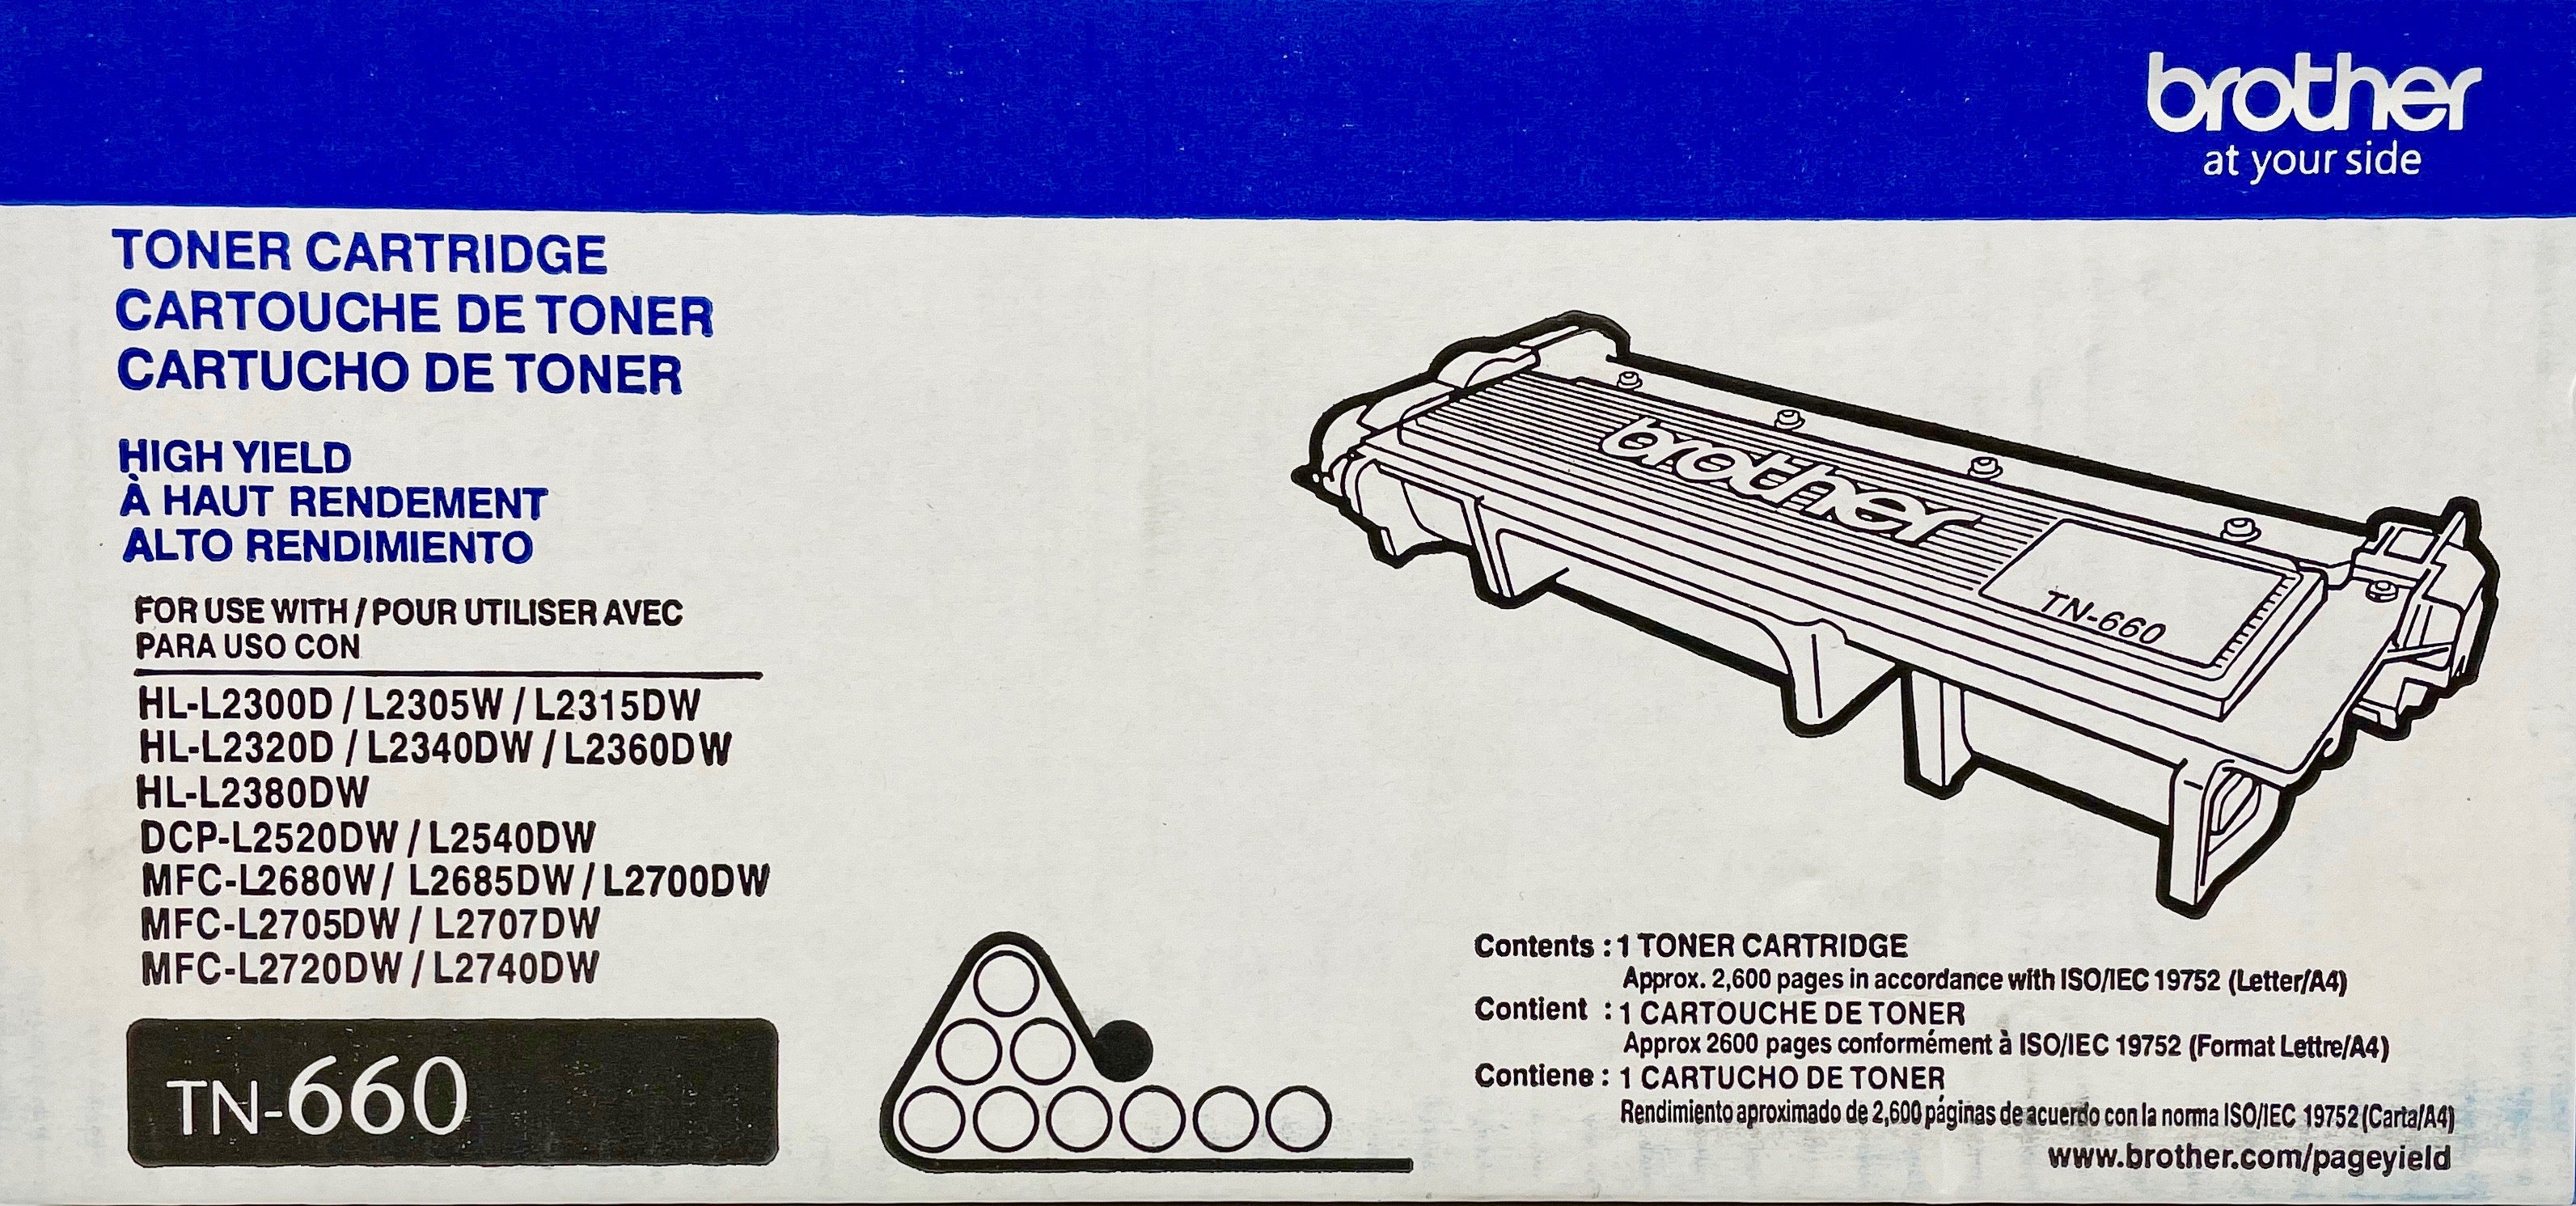 Discount Brother DCP-L2520DW Toner Cartridges